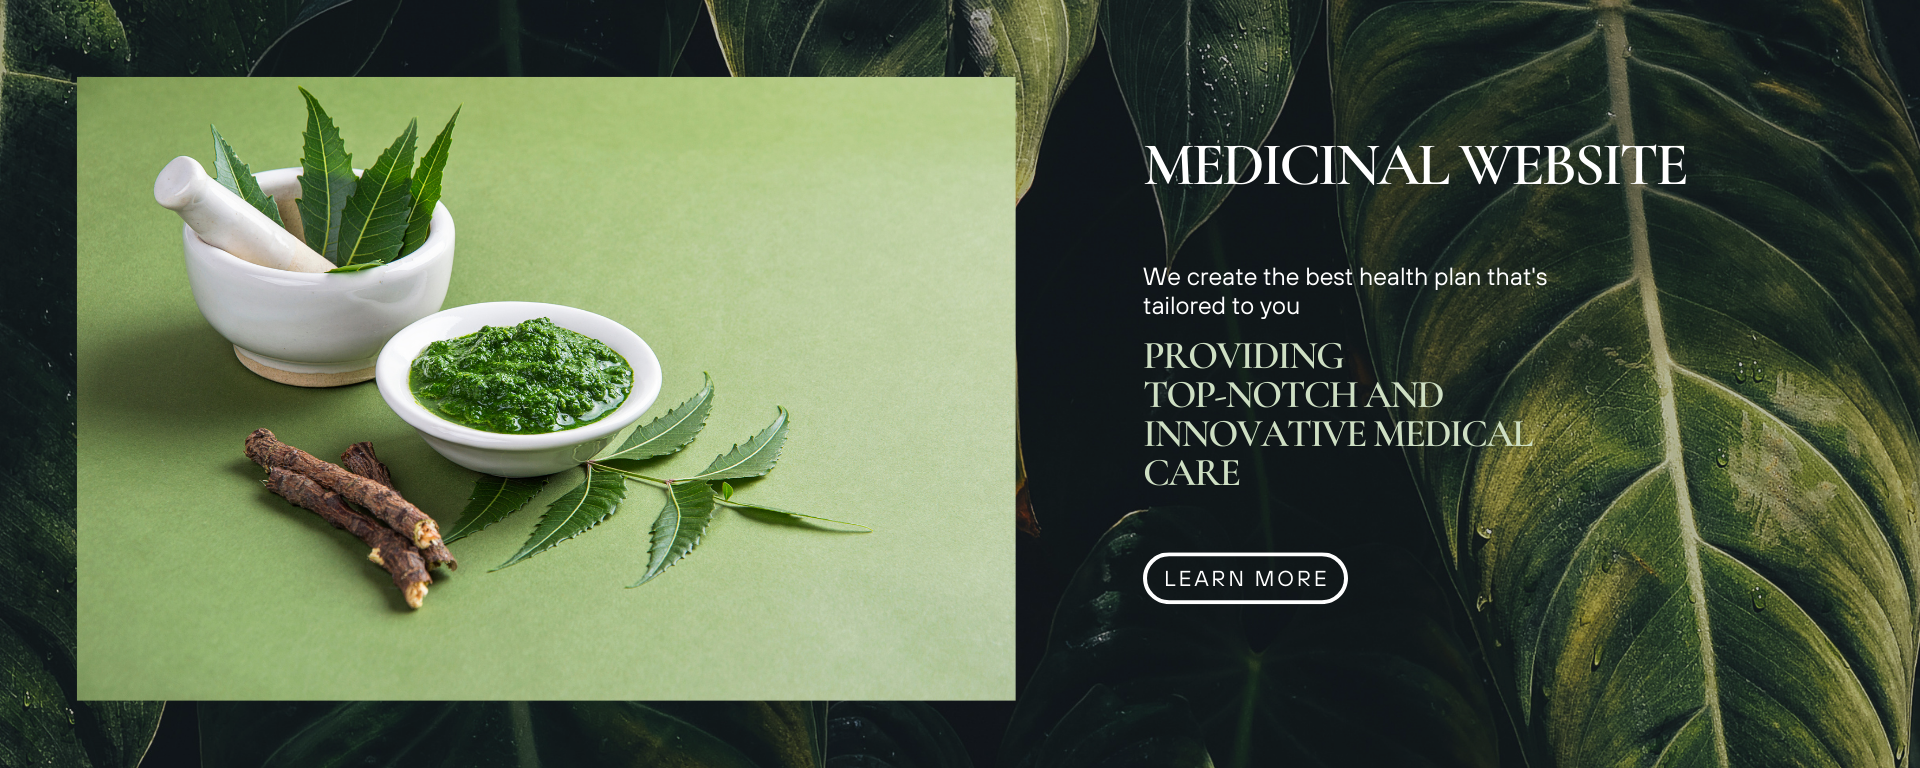 Medicinal Website